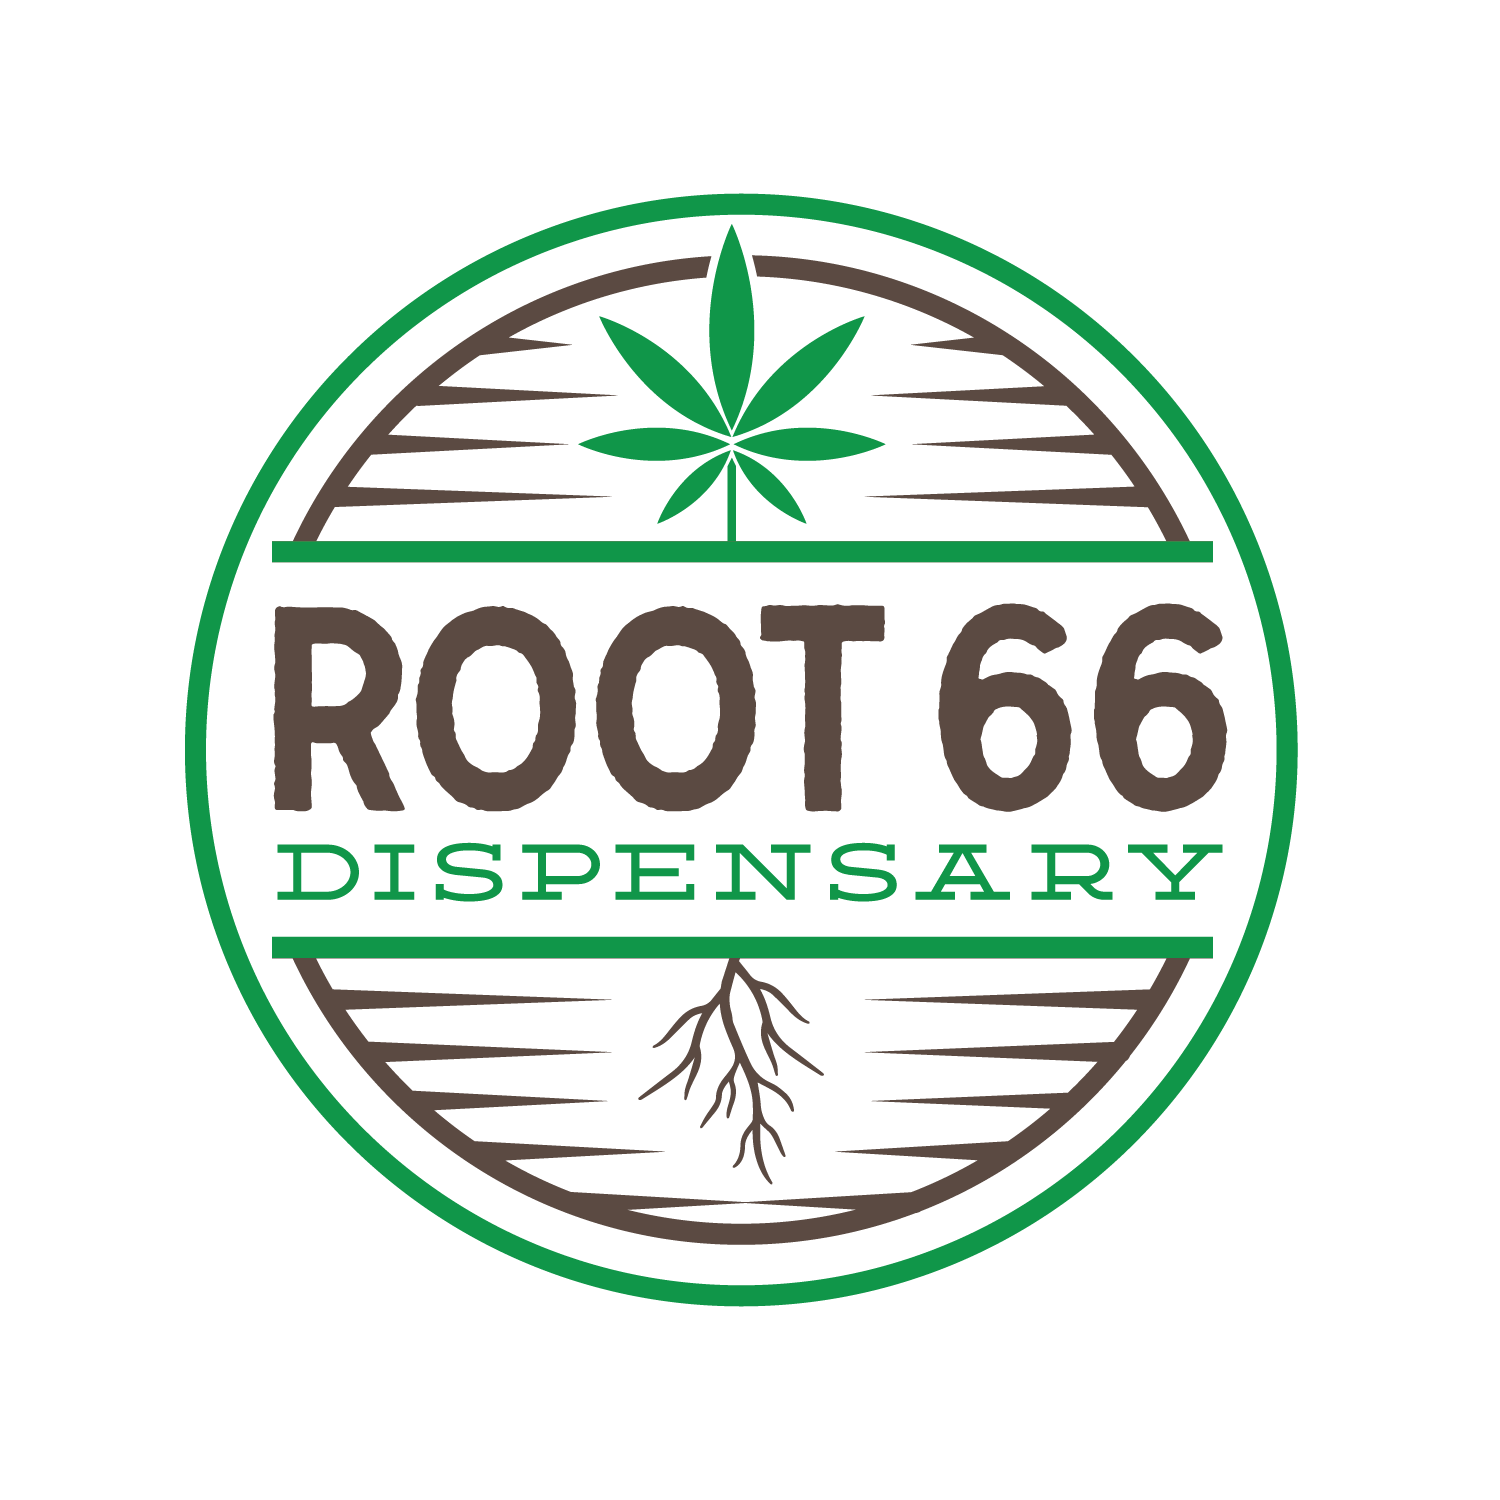 Root 66 Dispenary